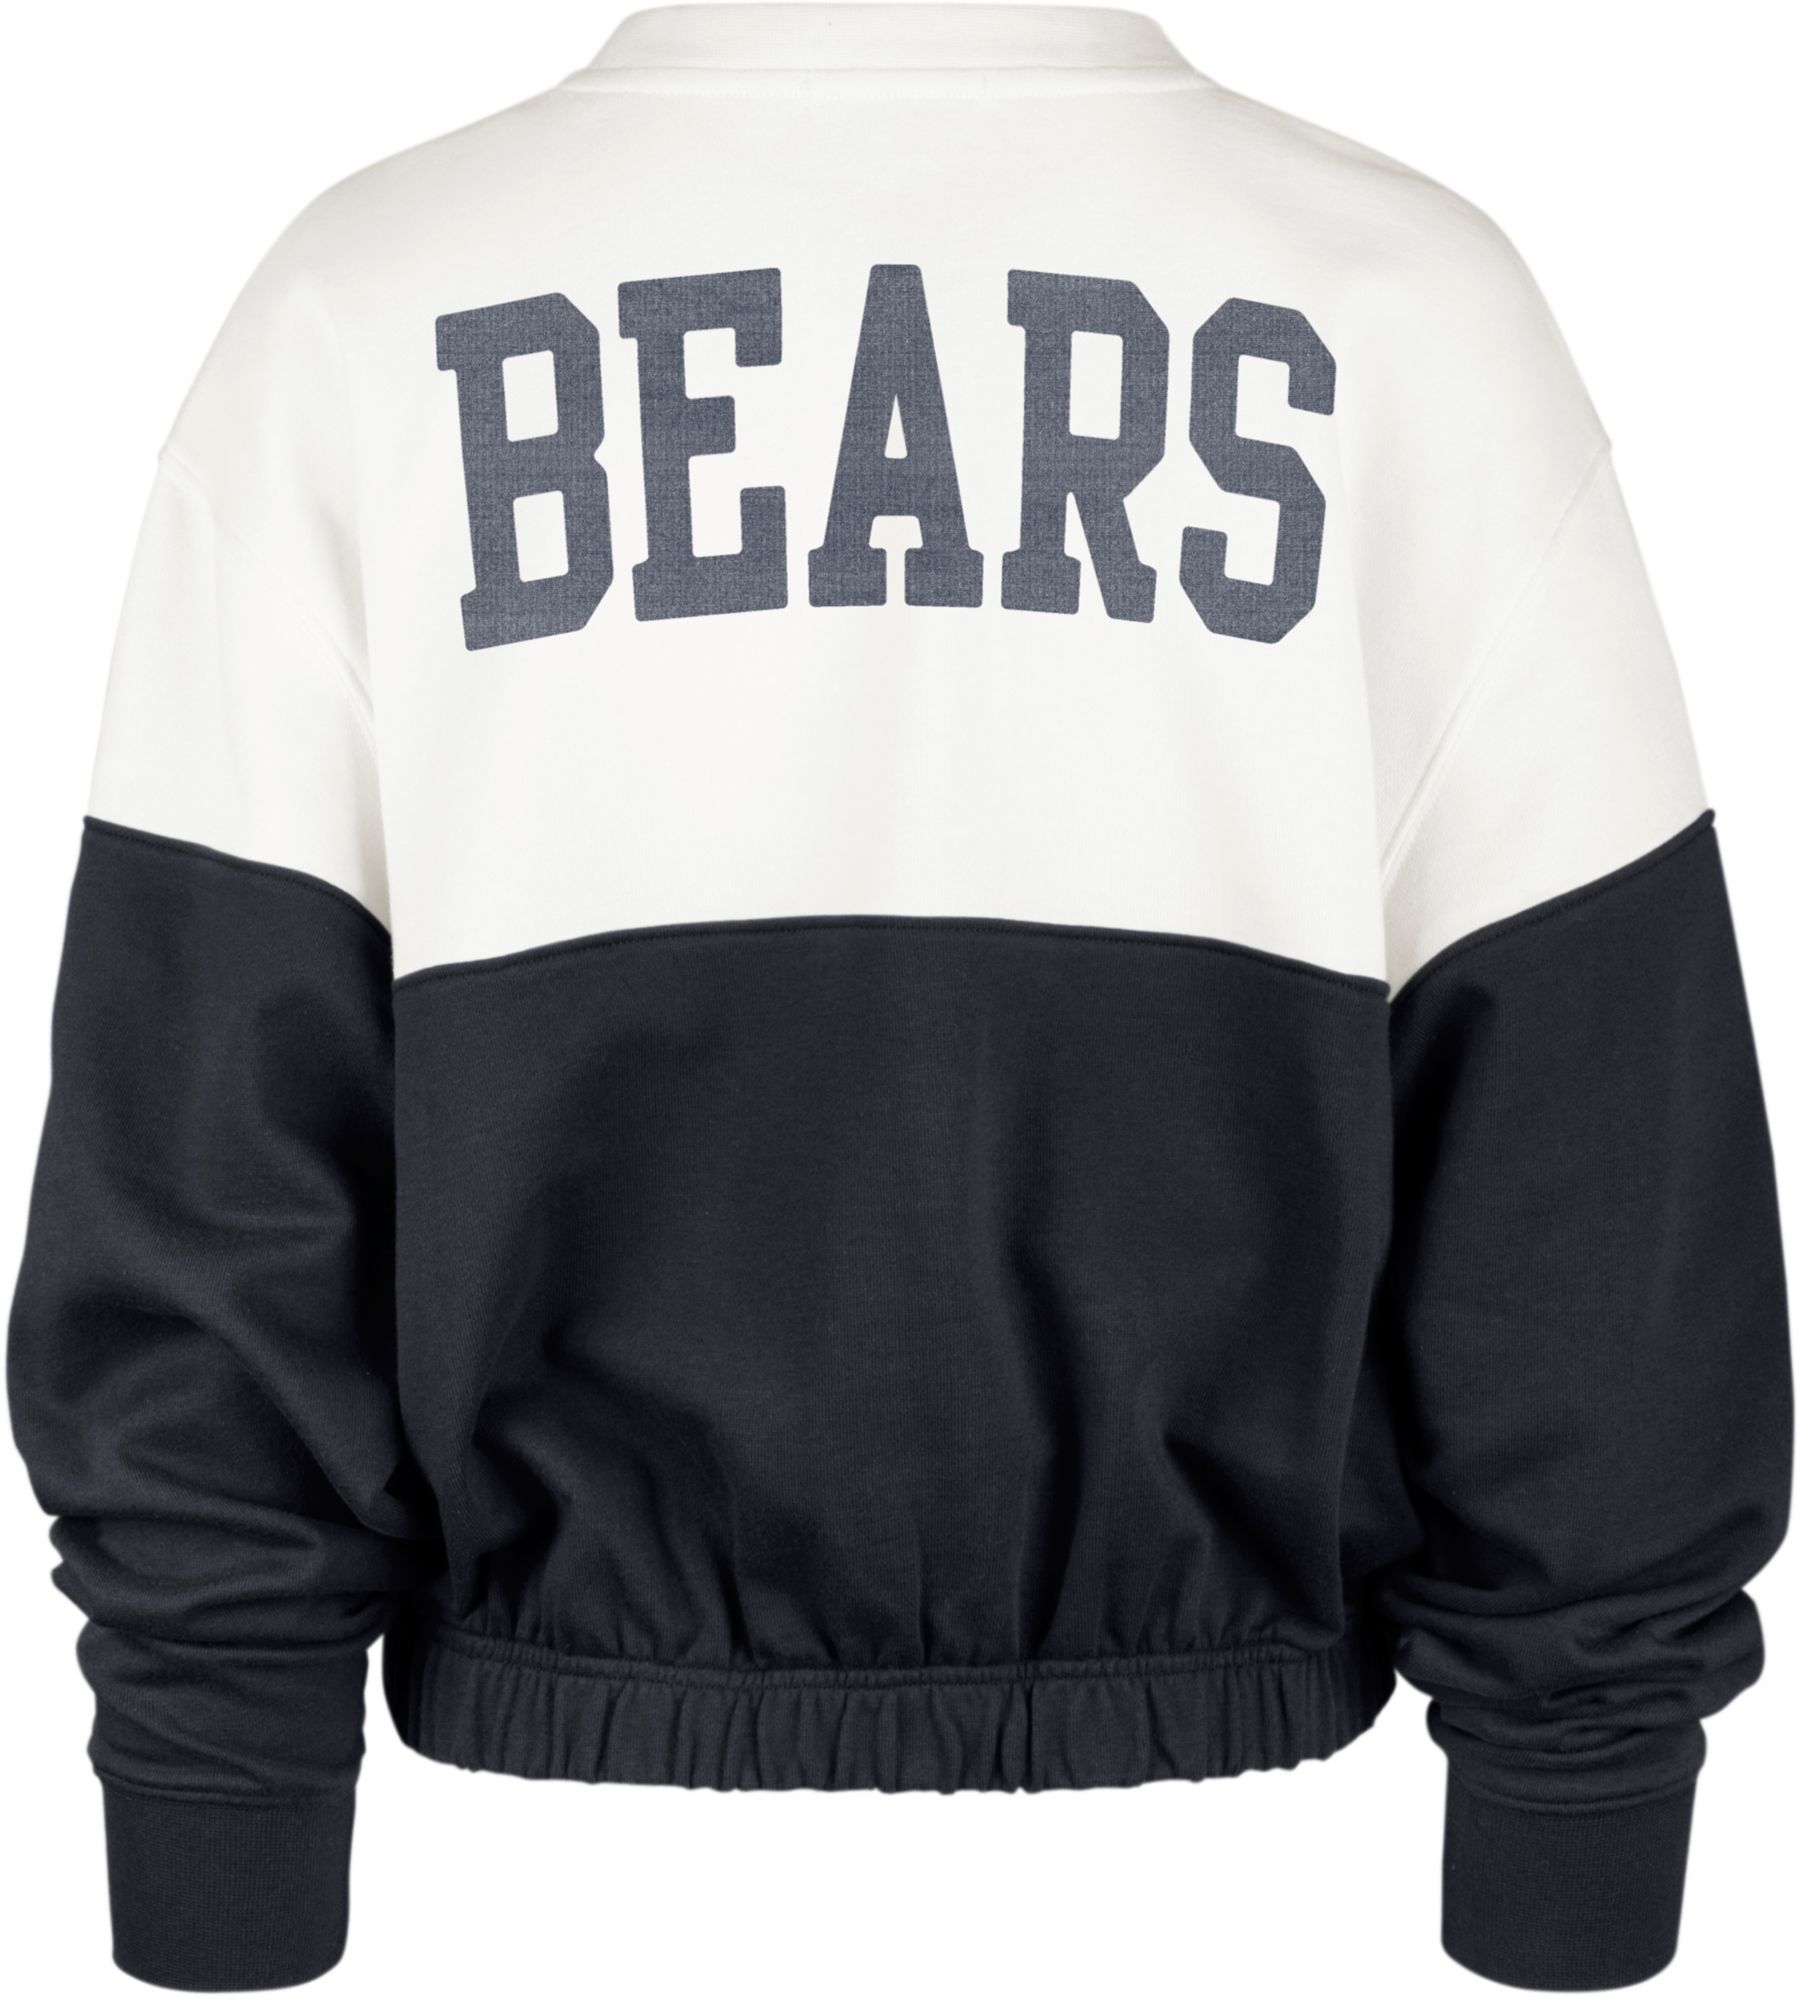 Chicago Bears women's jersey